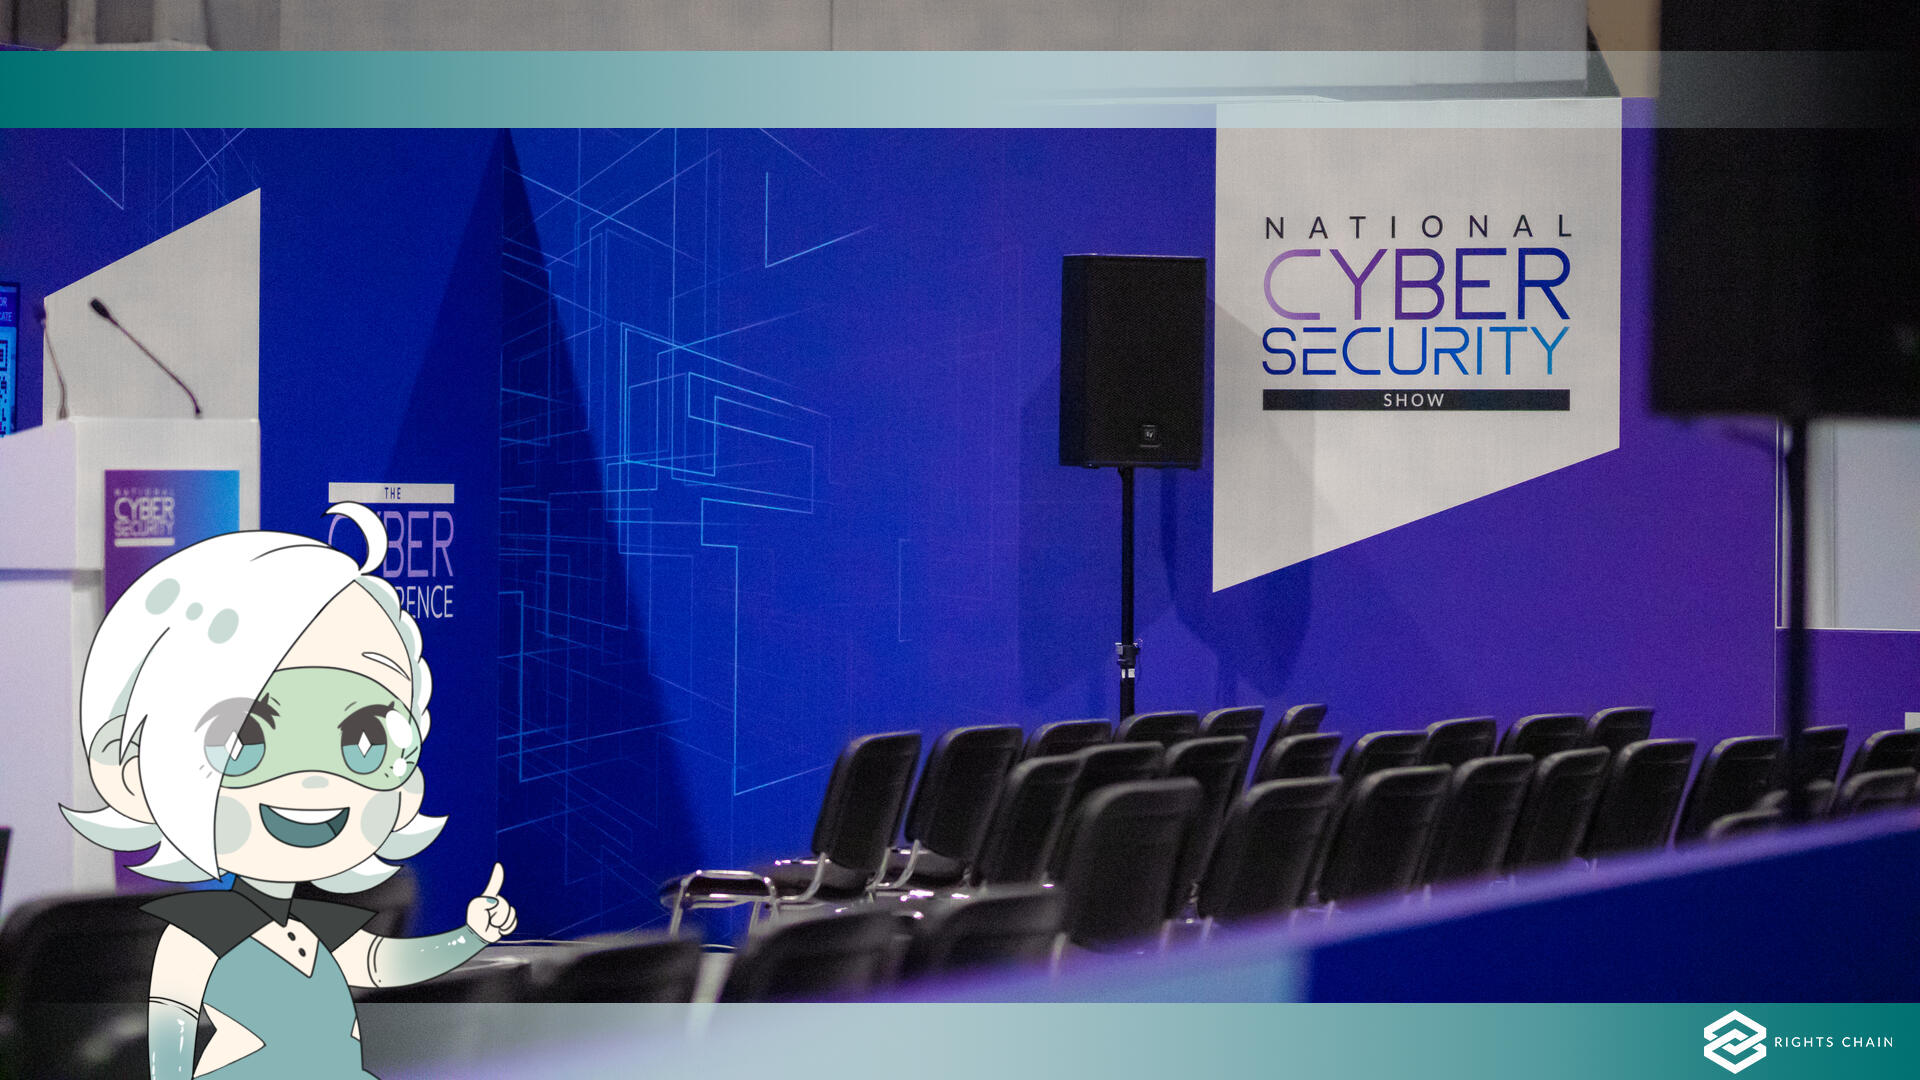 National Cyber Security Show Birmingham - La nostra esperienza.